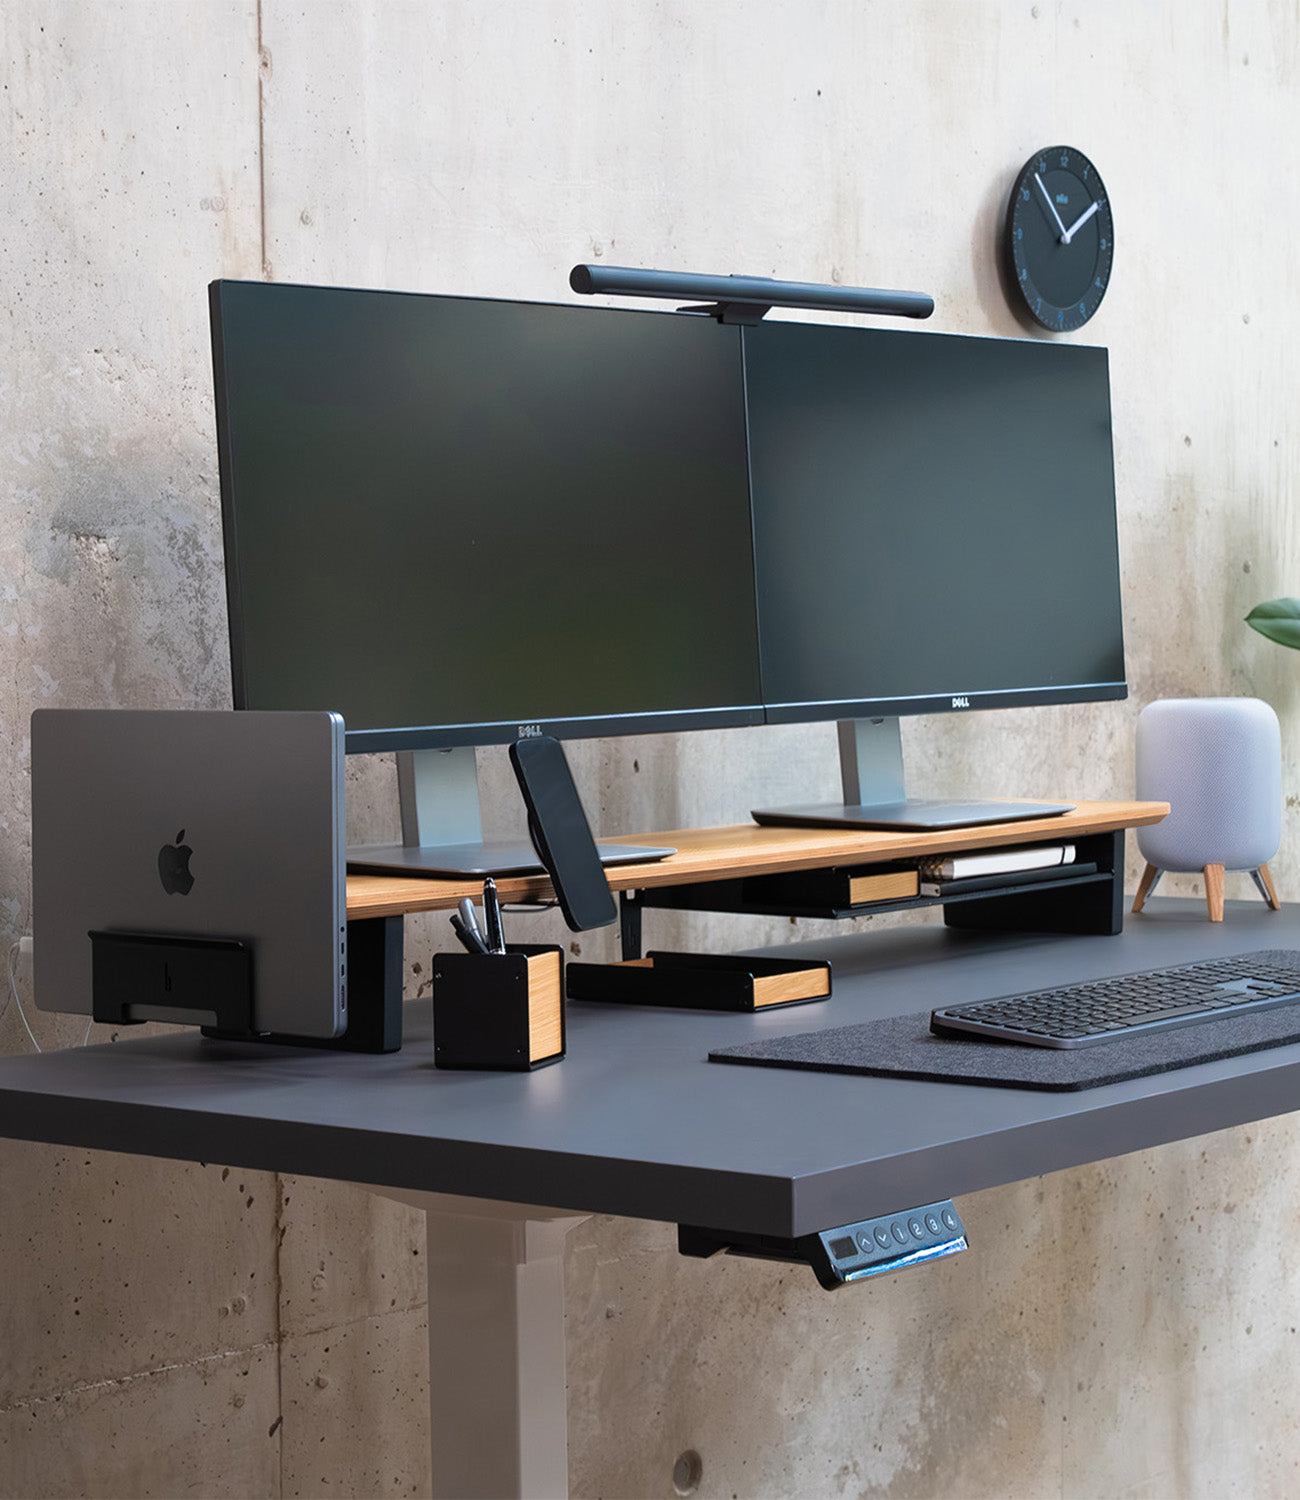 BALOLO, monitor riser, monitor stand, desk shelf, desk setup, desk organizer, modular desk shelf, desk accessories, desk organization, work from home, office